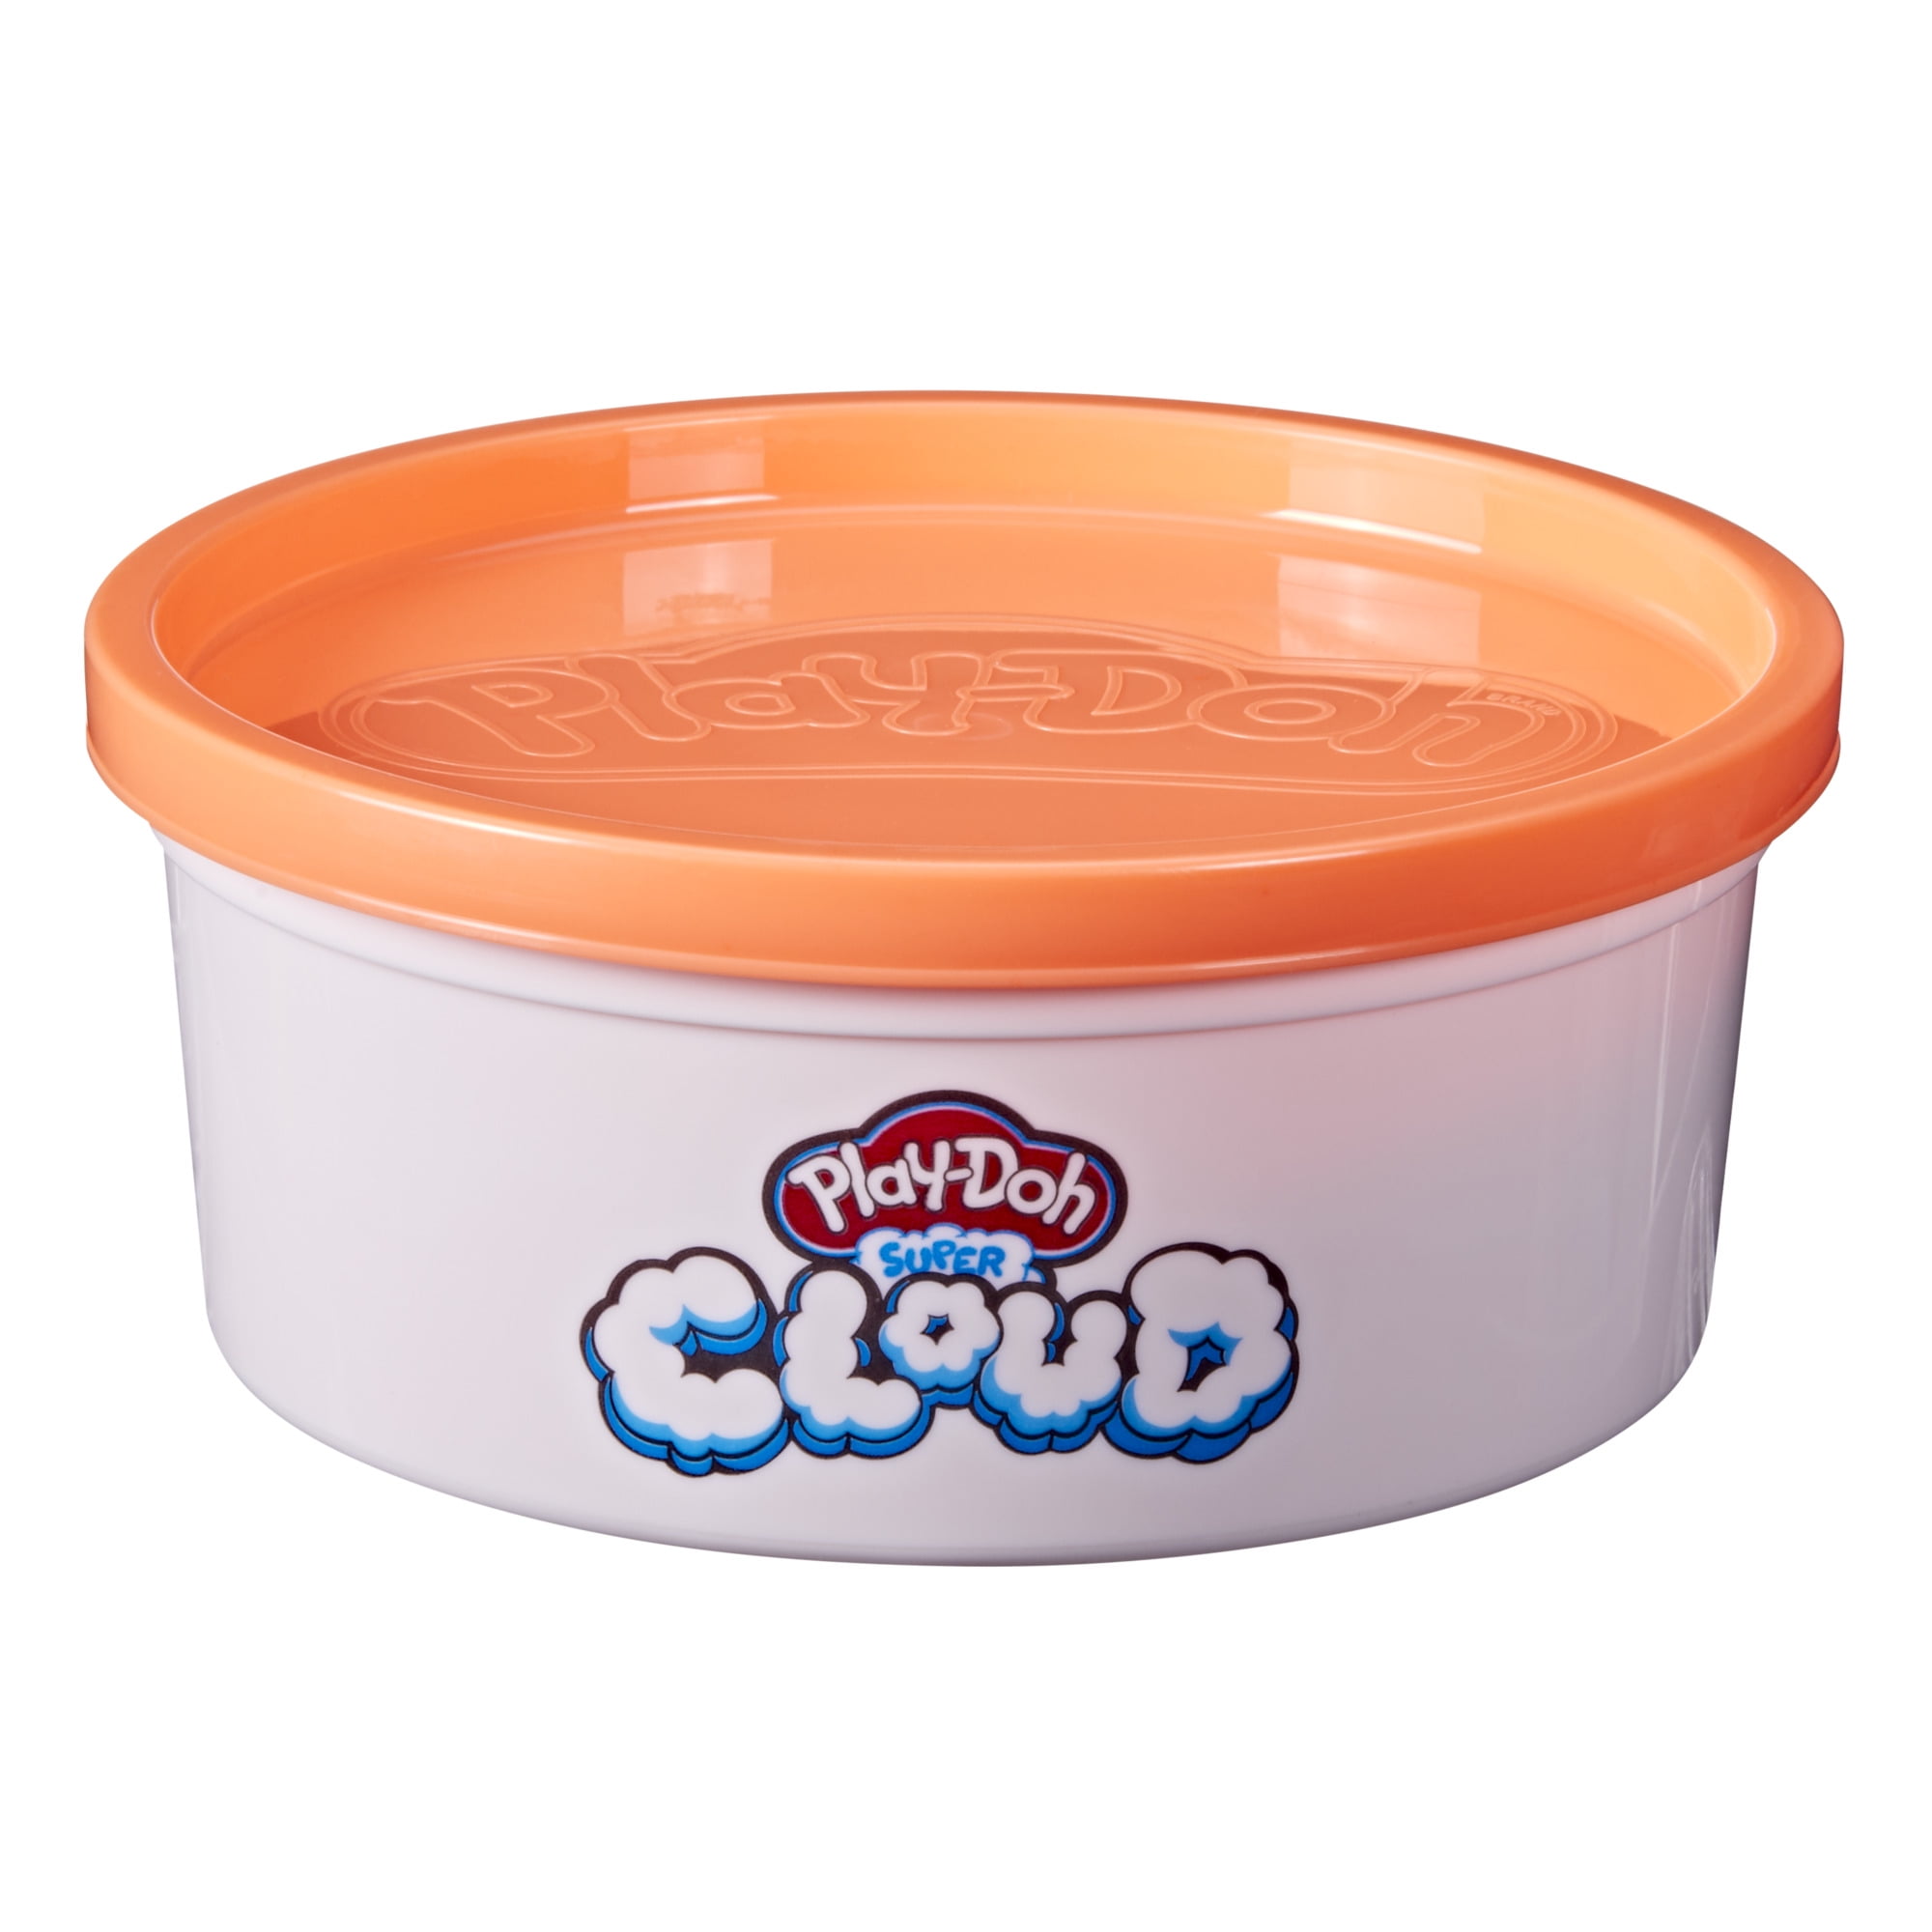 Play-Doh Single Can - Neon Orange, 4 oz - Foods Co.